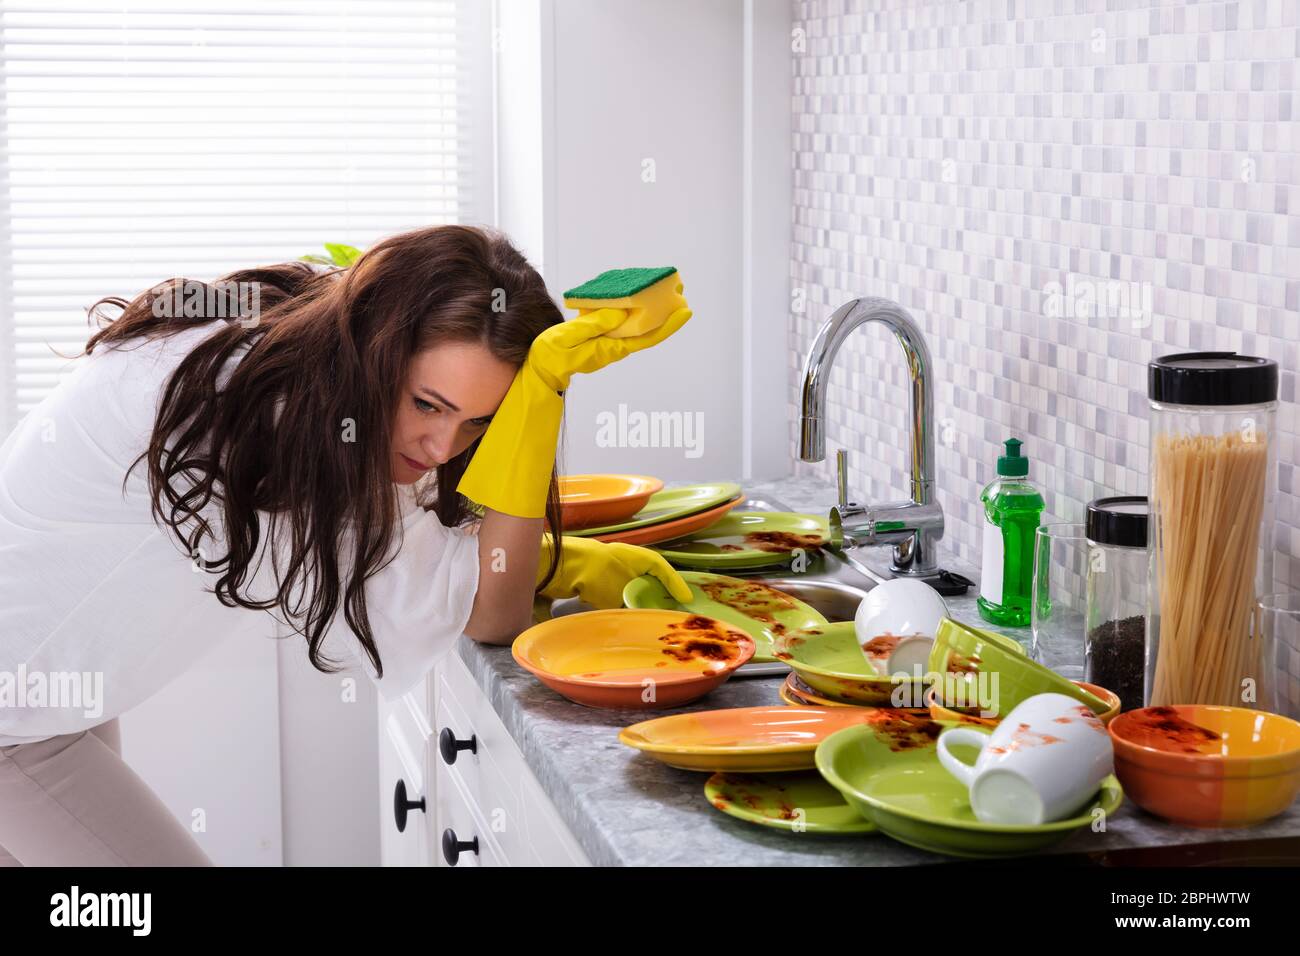 She the dishes already. Уставшая мама на кухне. Усталая женщина моет посуду. Женщина уставшая от постоянной готовки на кухне. Женщина устала на кухне.